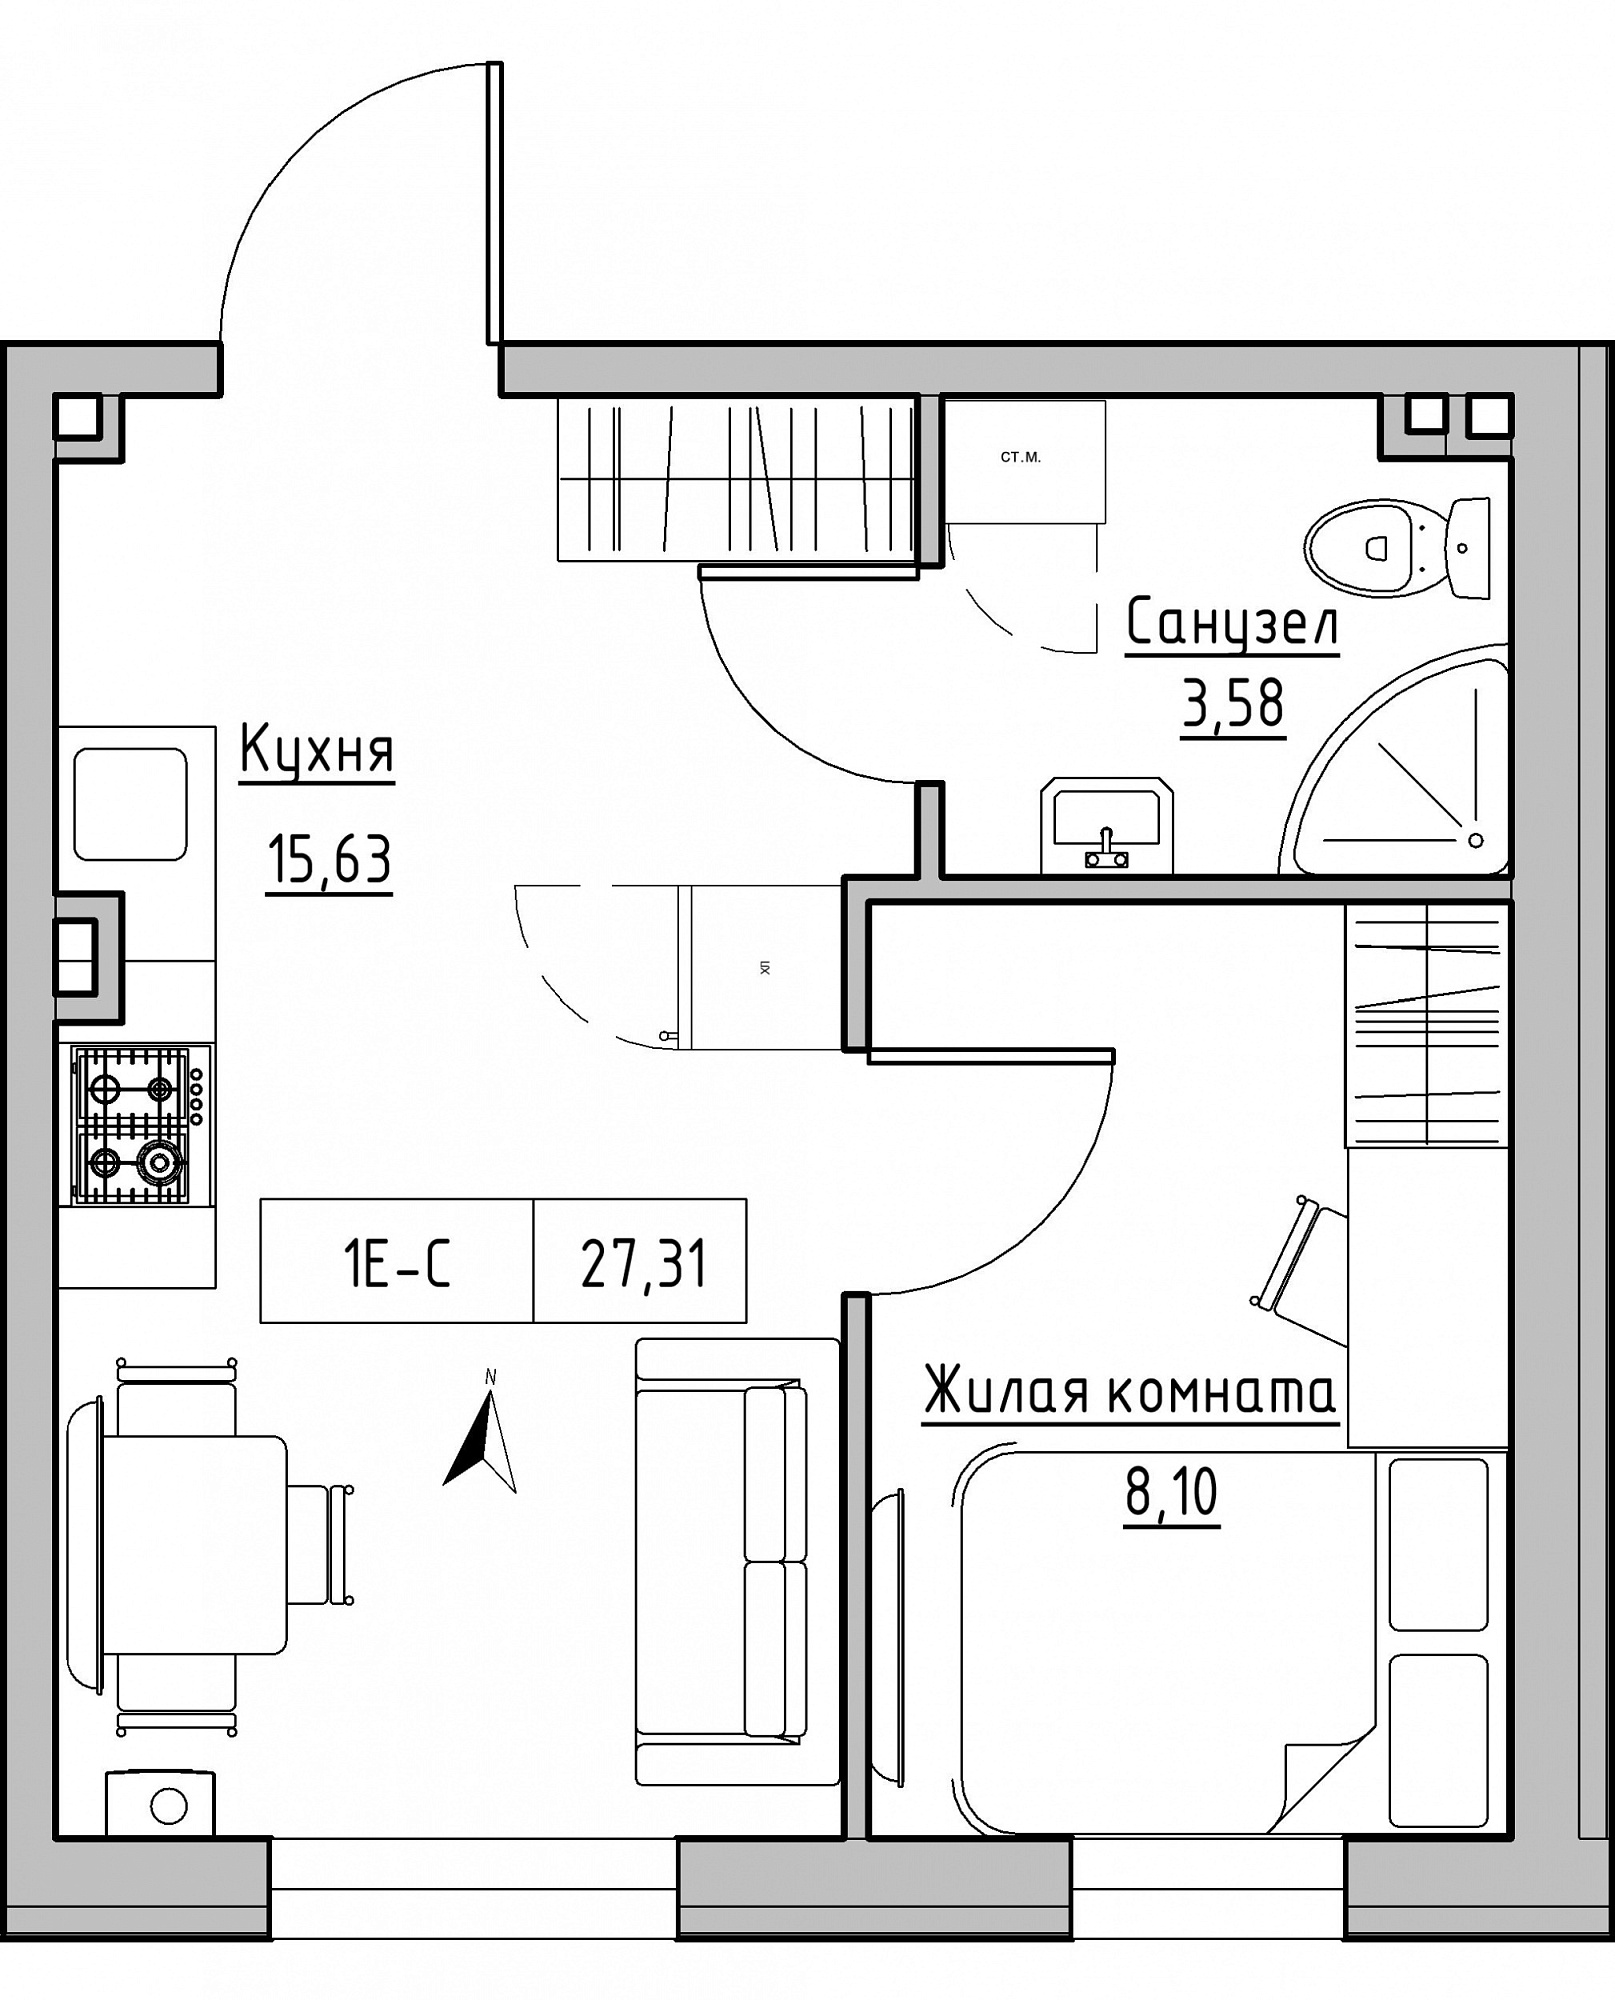 Planning 1-rm flats area 27.31m2, KS-024-03/0004.